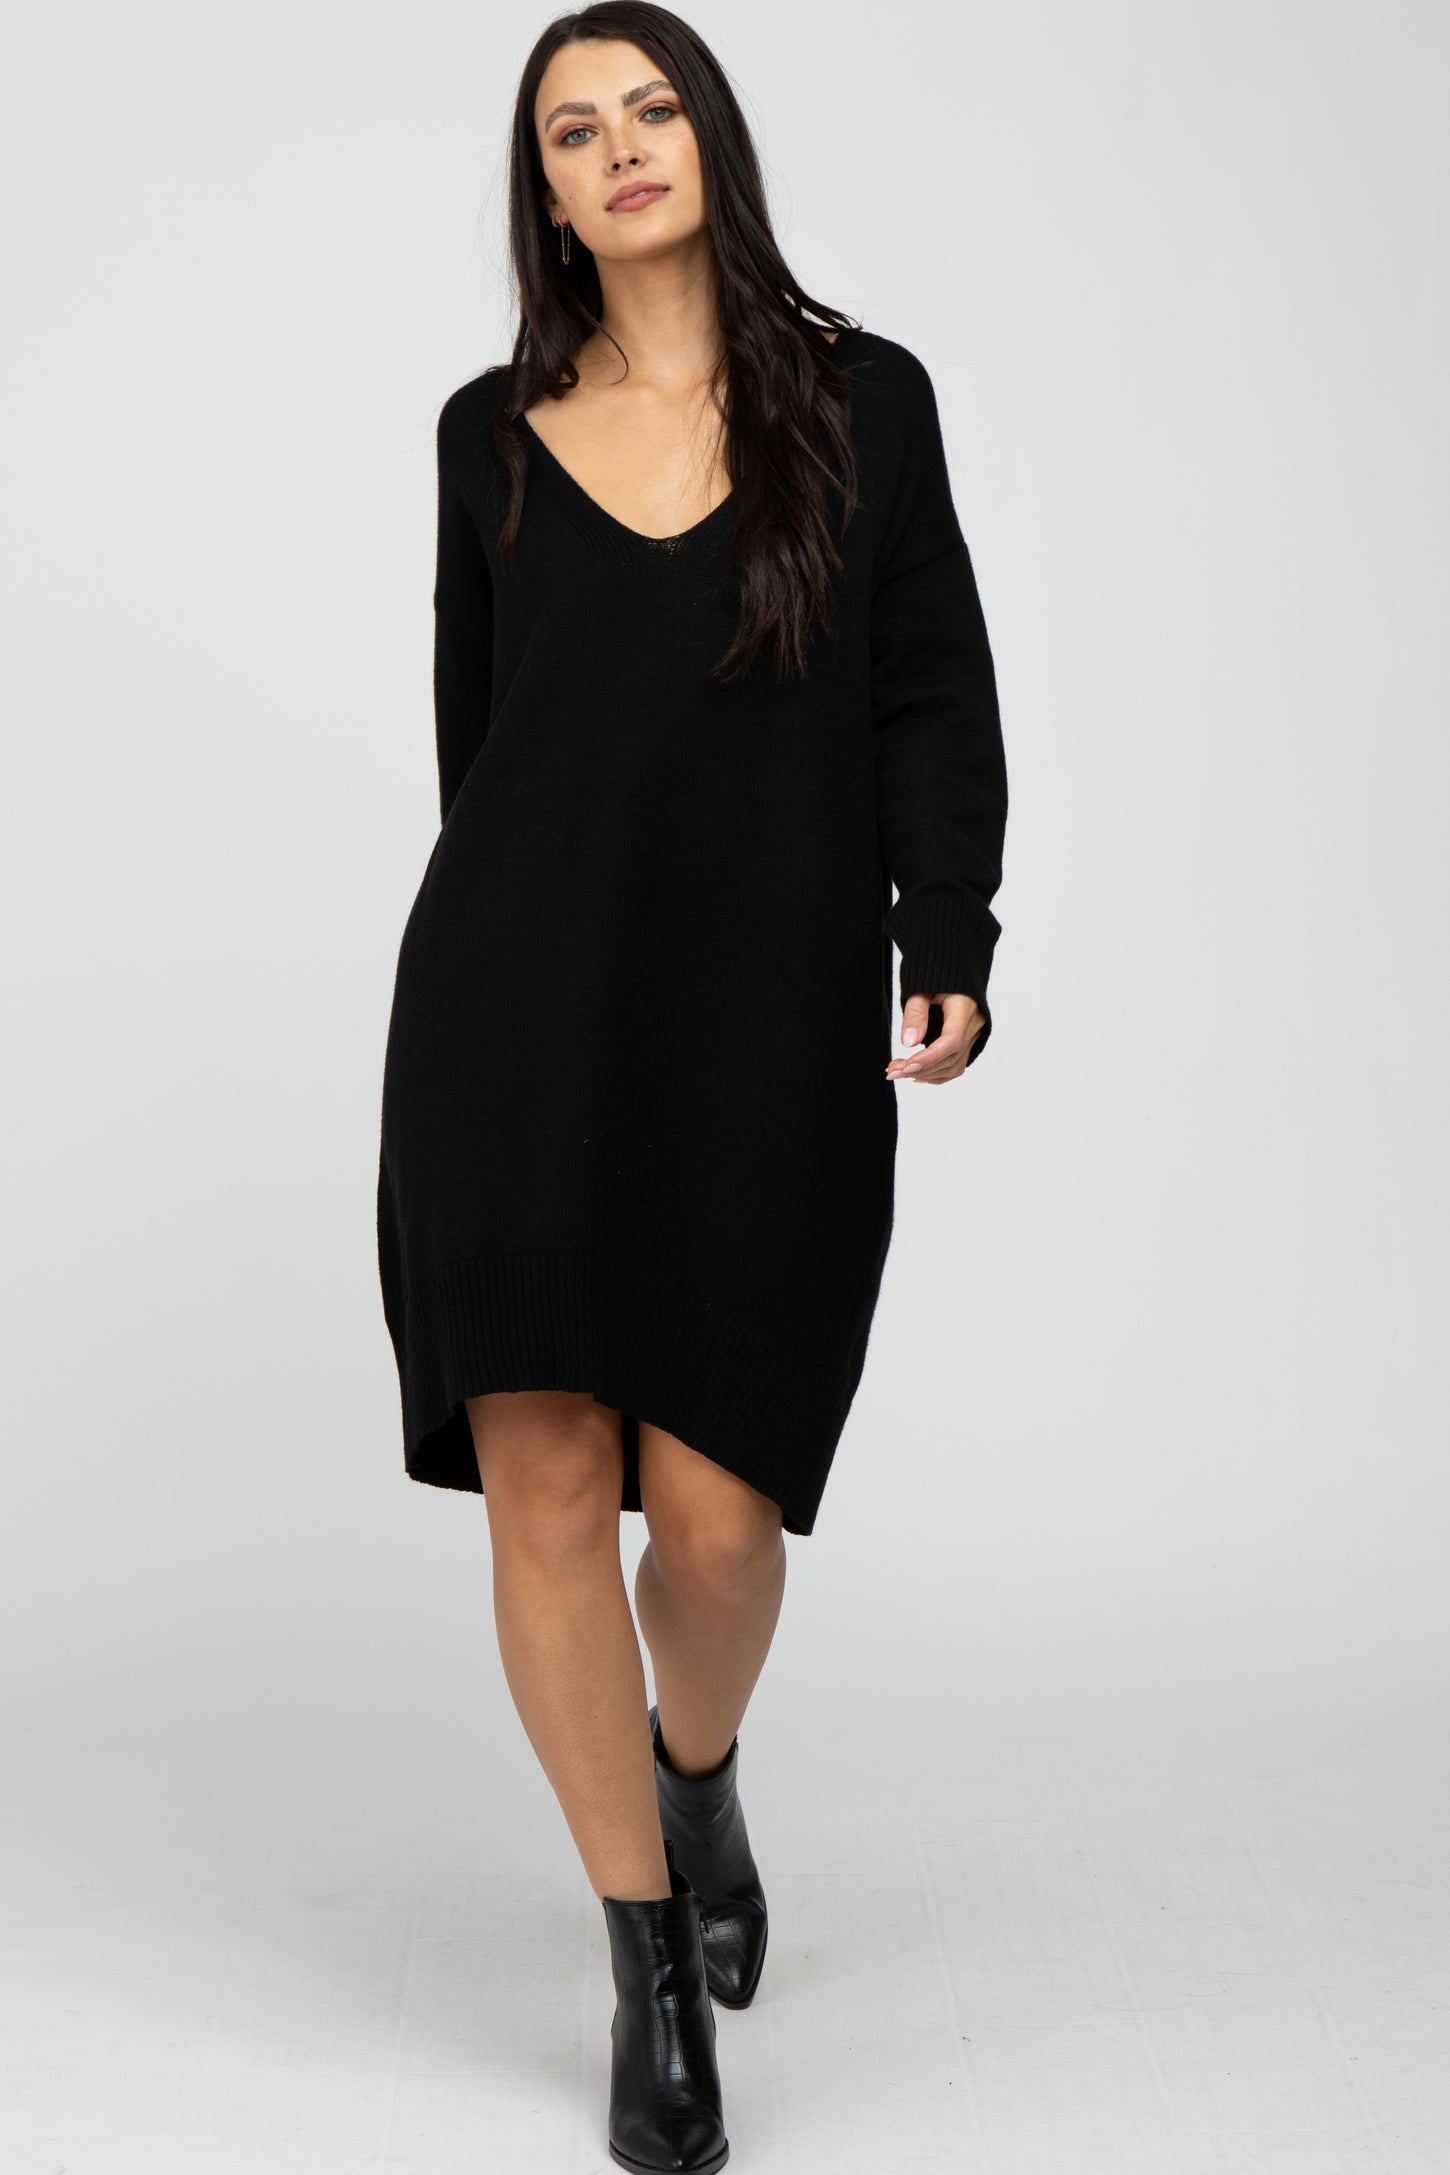 Black Knit Long Sleeve Sweater Dress